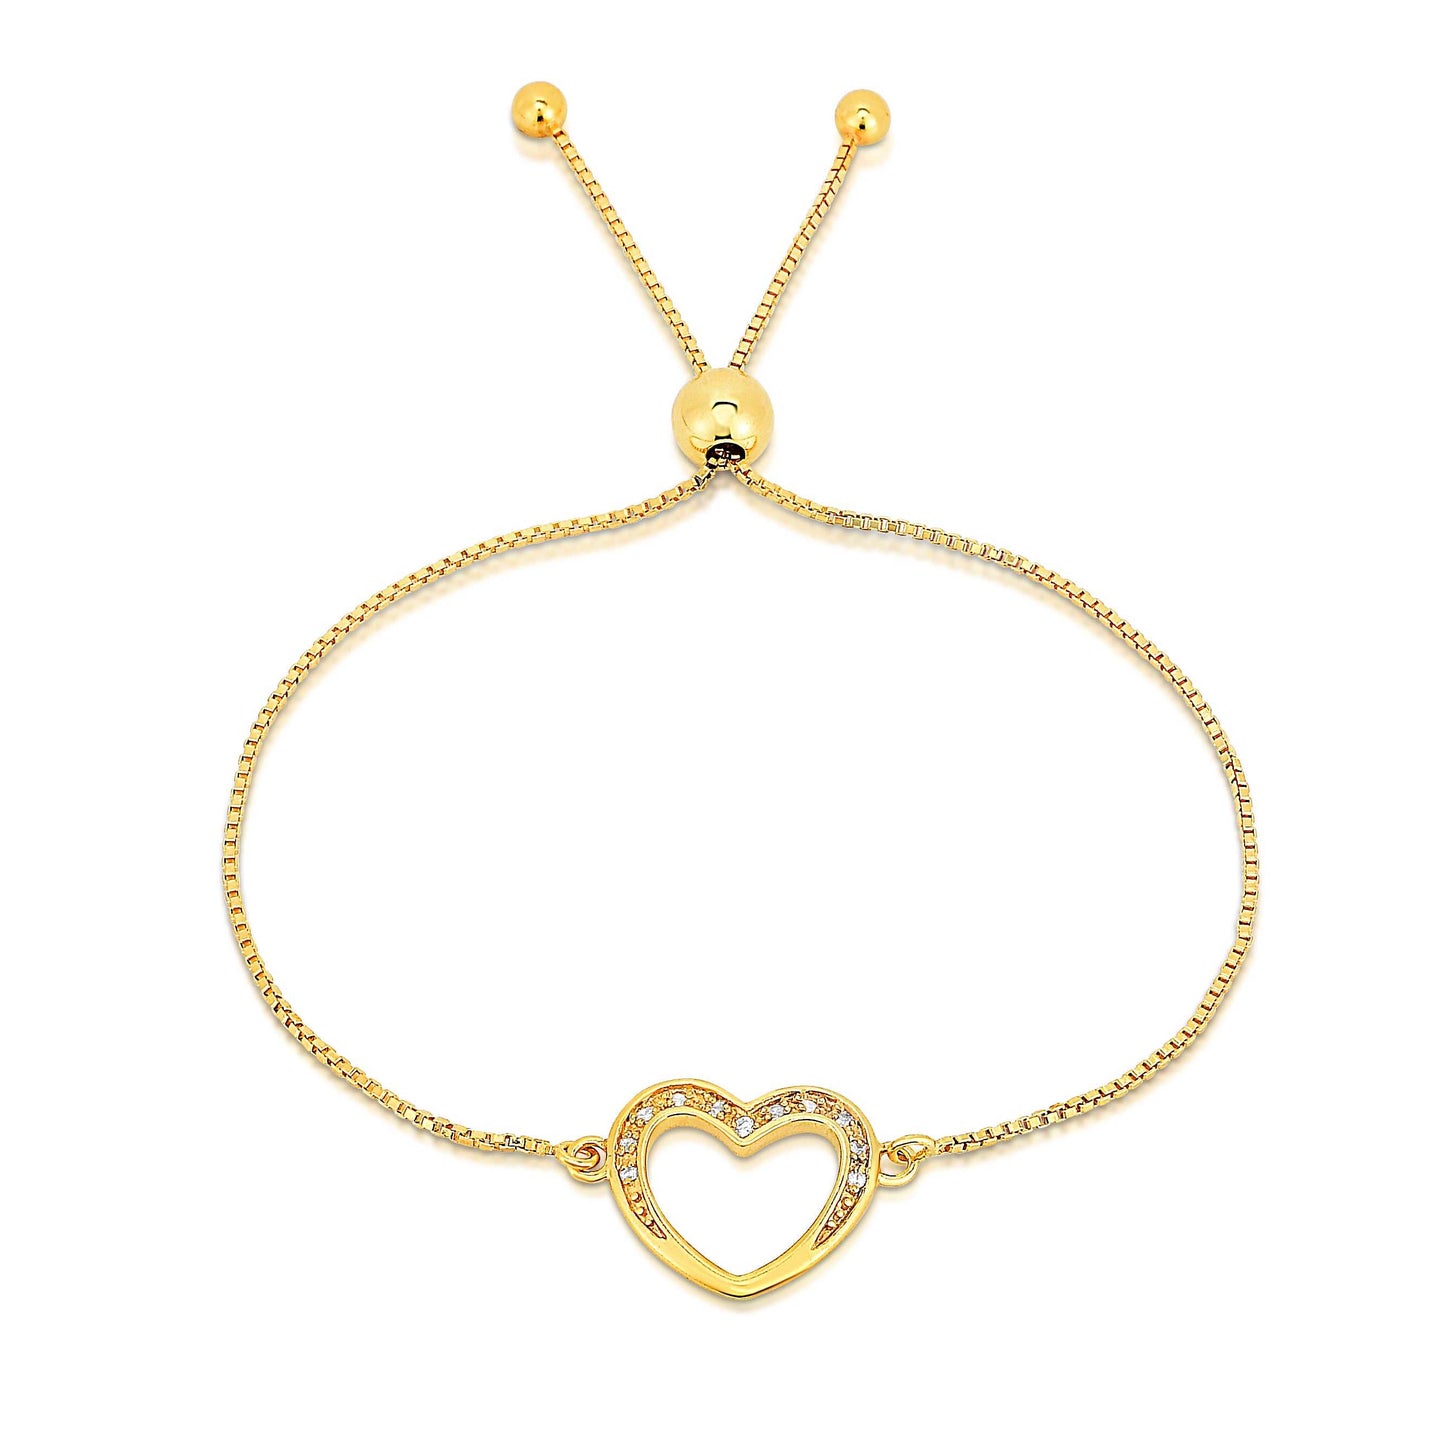 Gold Italian Sterling Silver Adjustable Heart Charm Bracelet